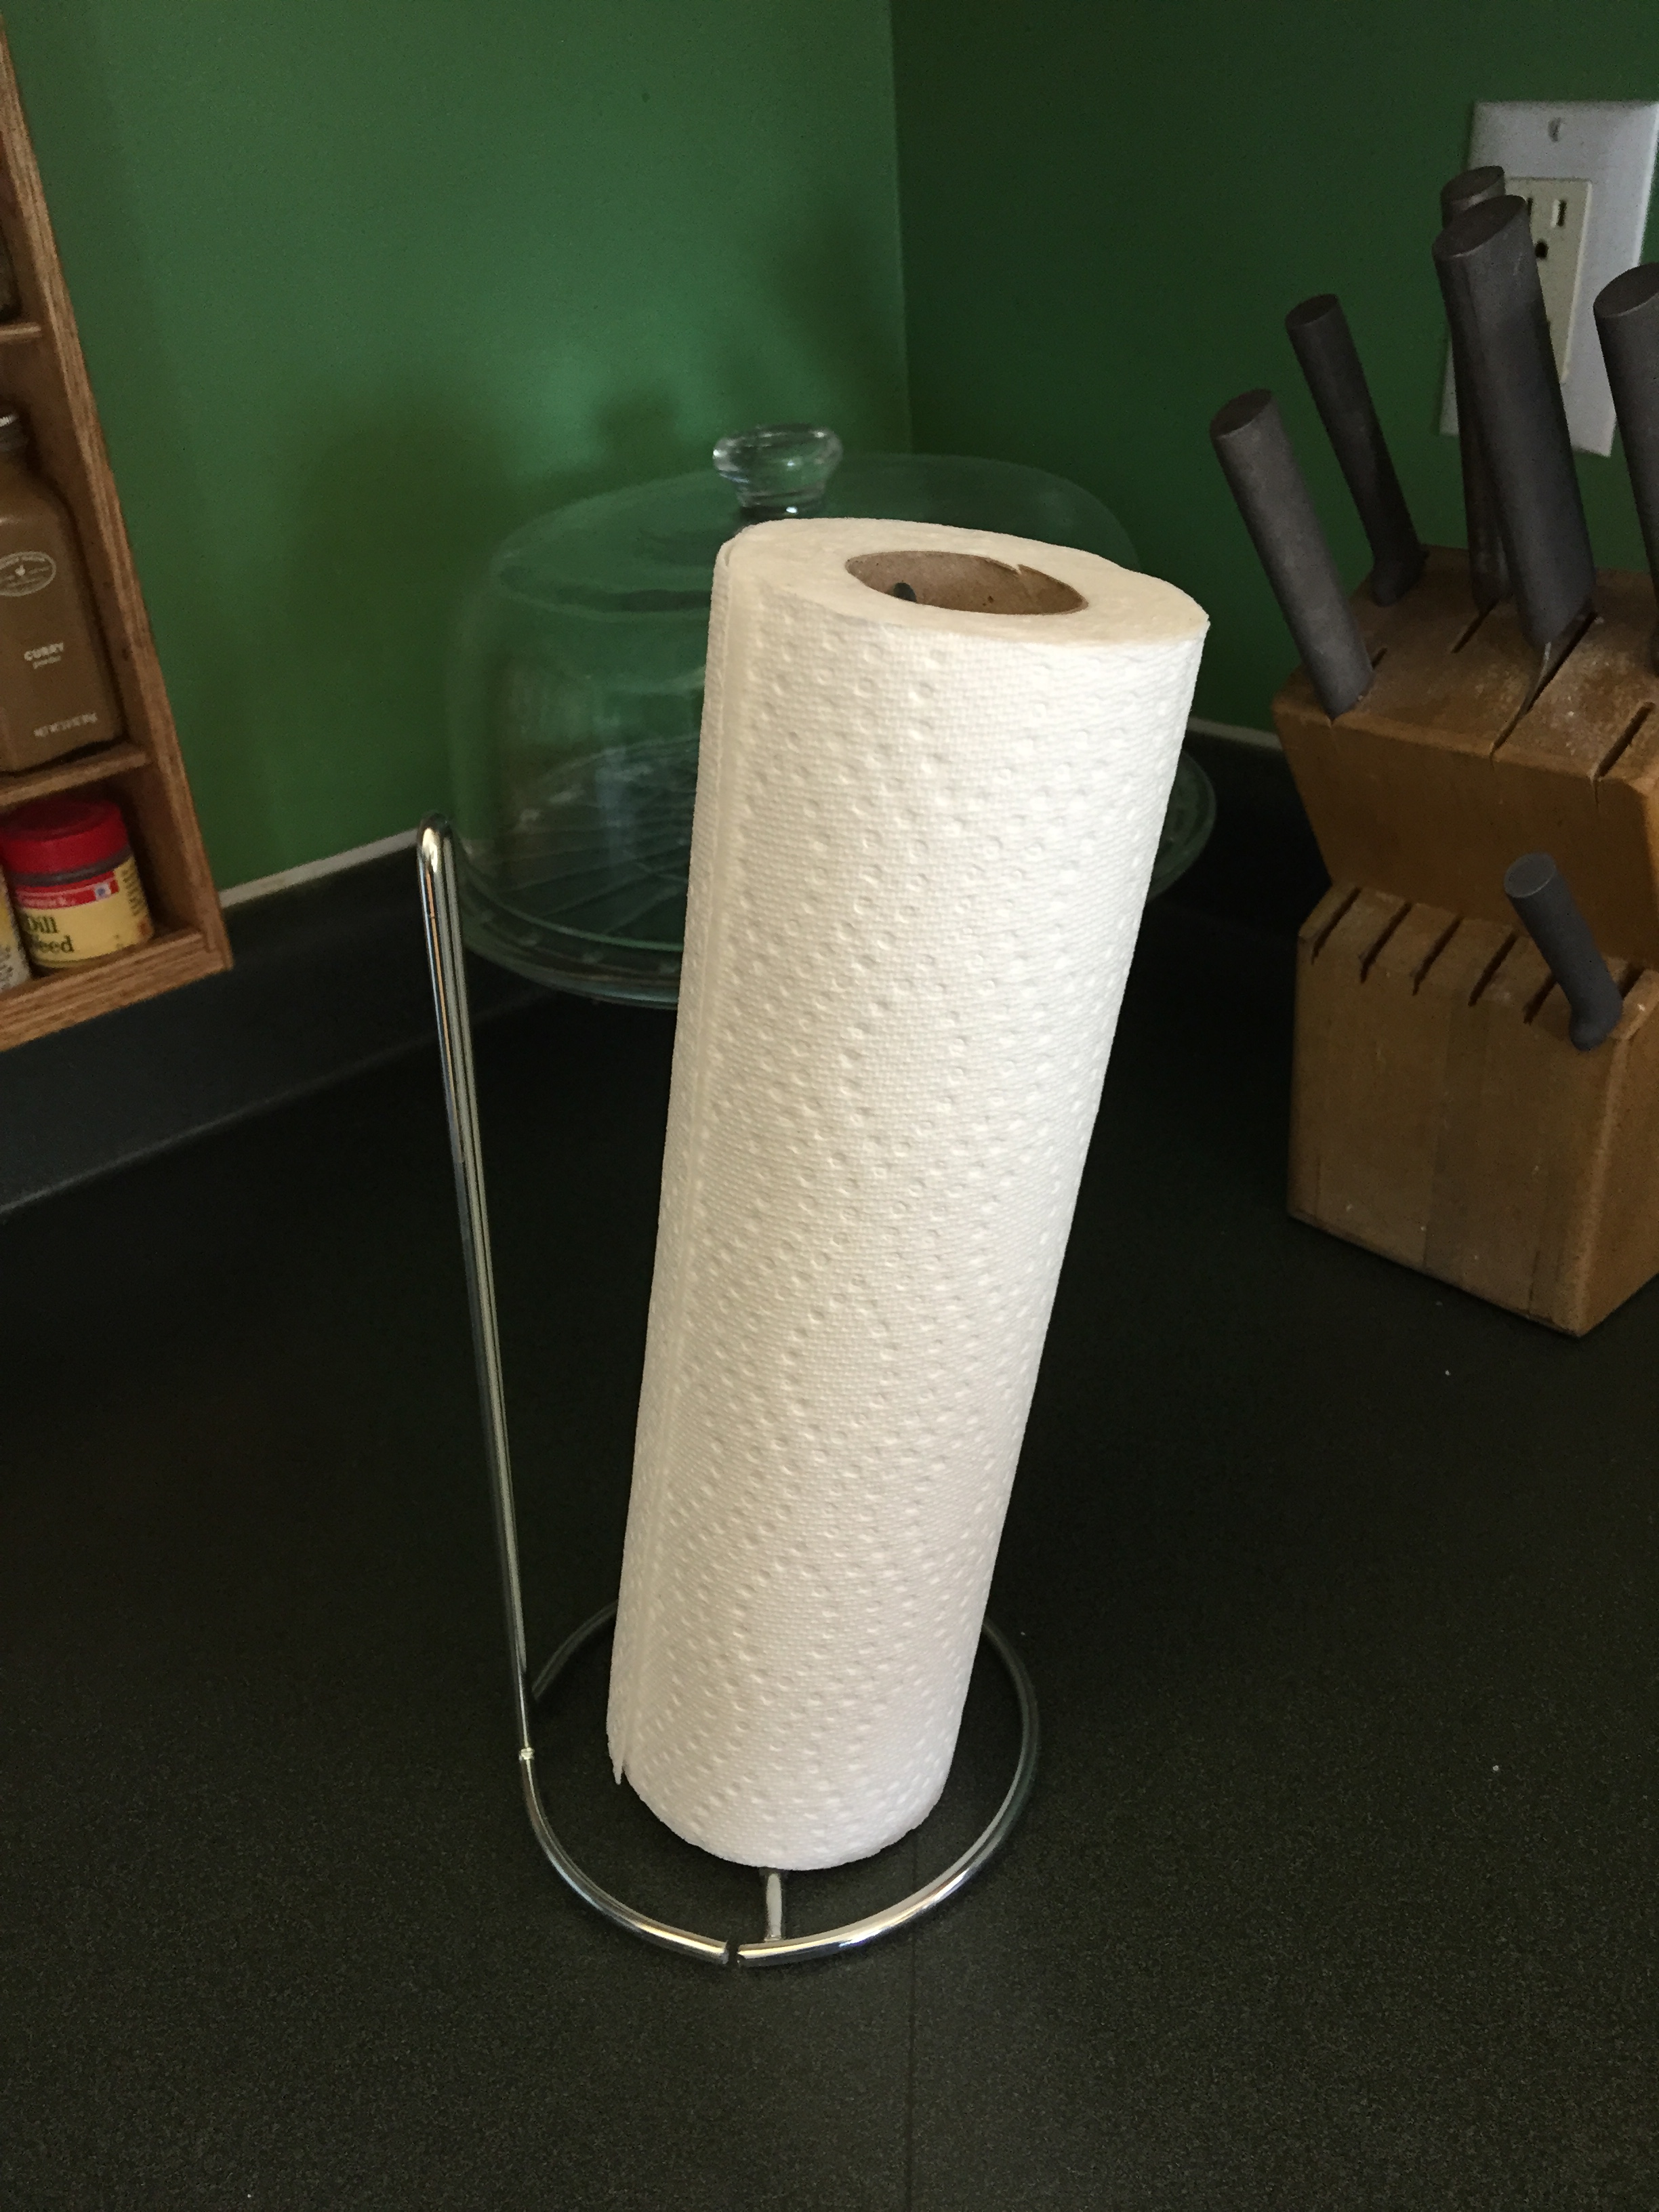 Paper Towel Holder Testimonial Research | AdamParkGold: Seeking ... - Mom's IKEA Paper Towel Holder 03